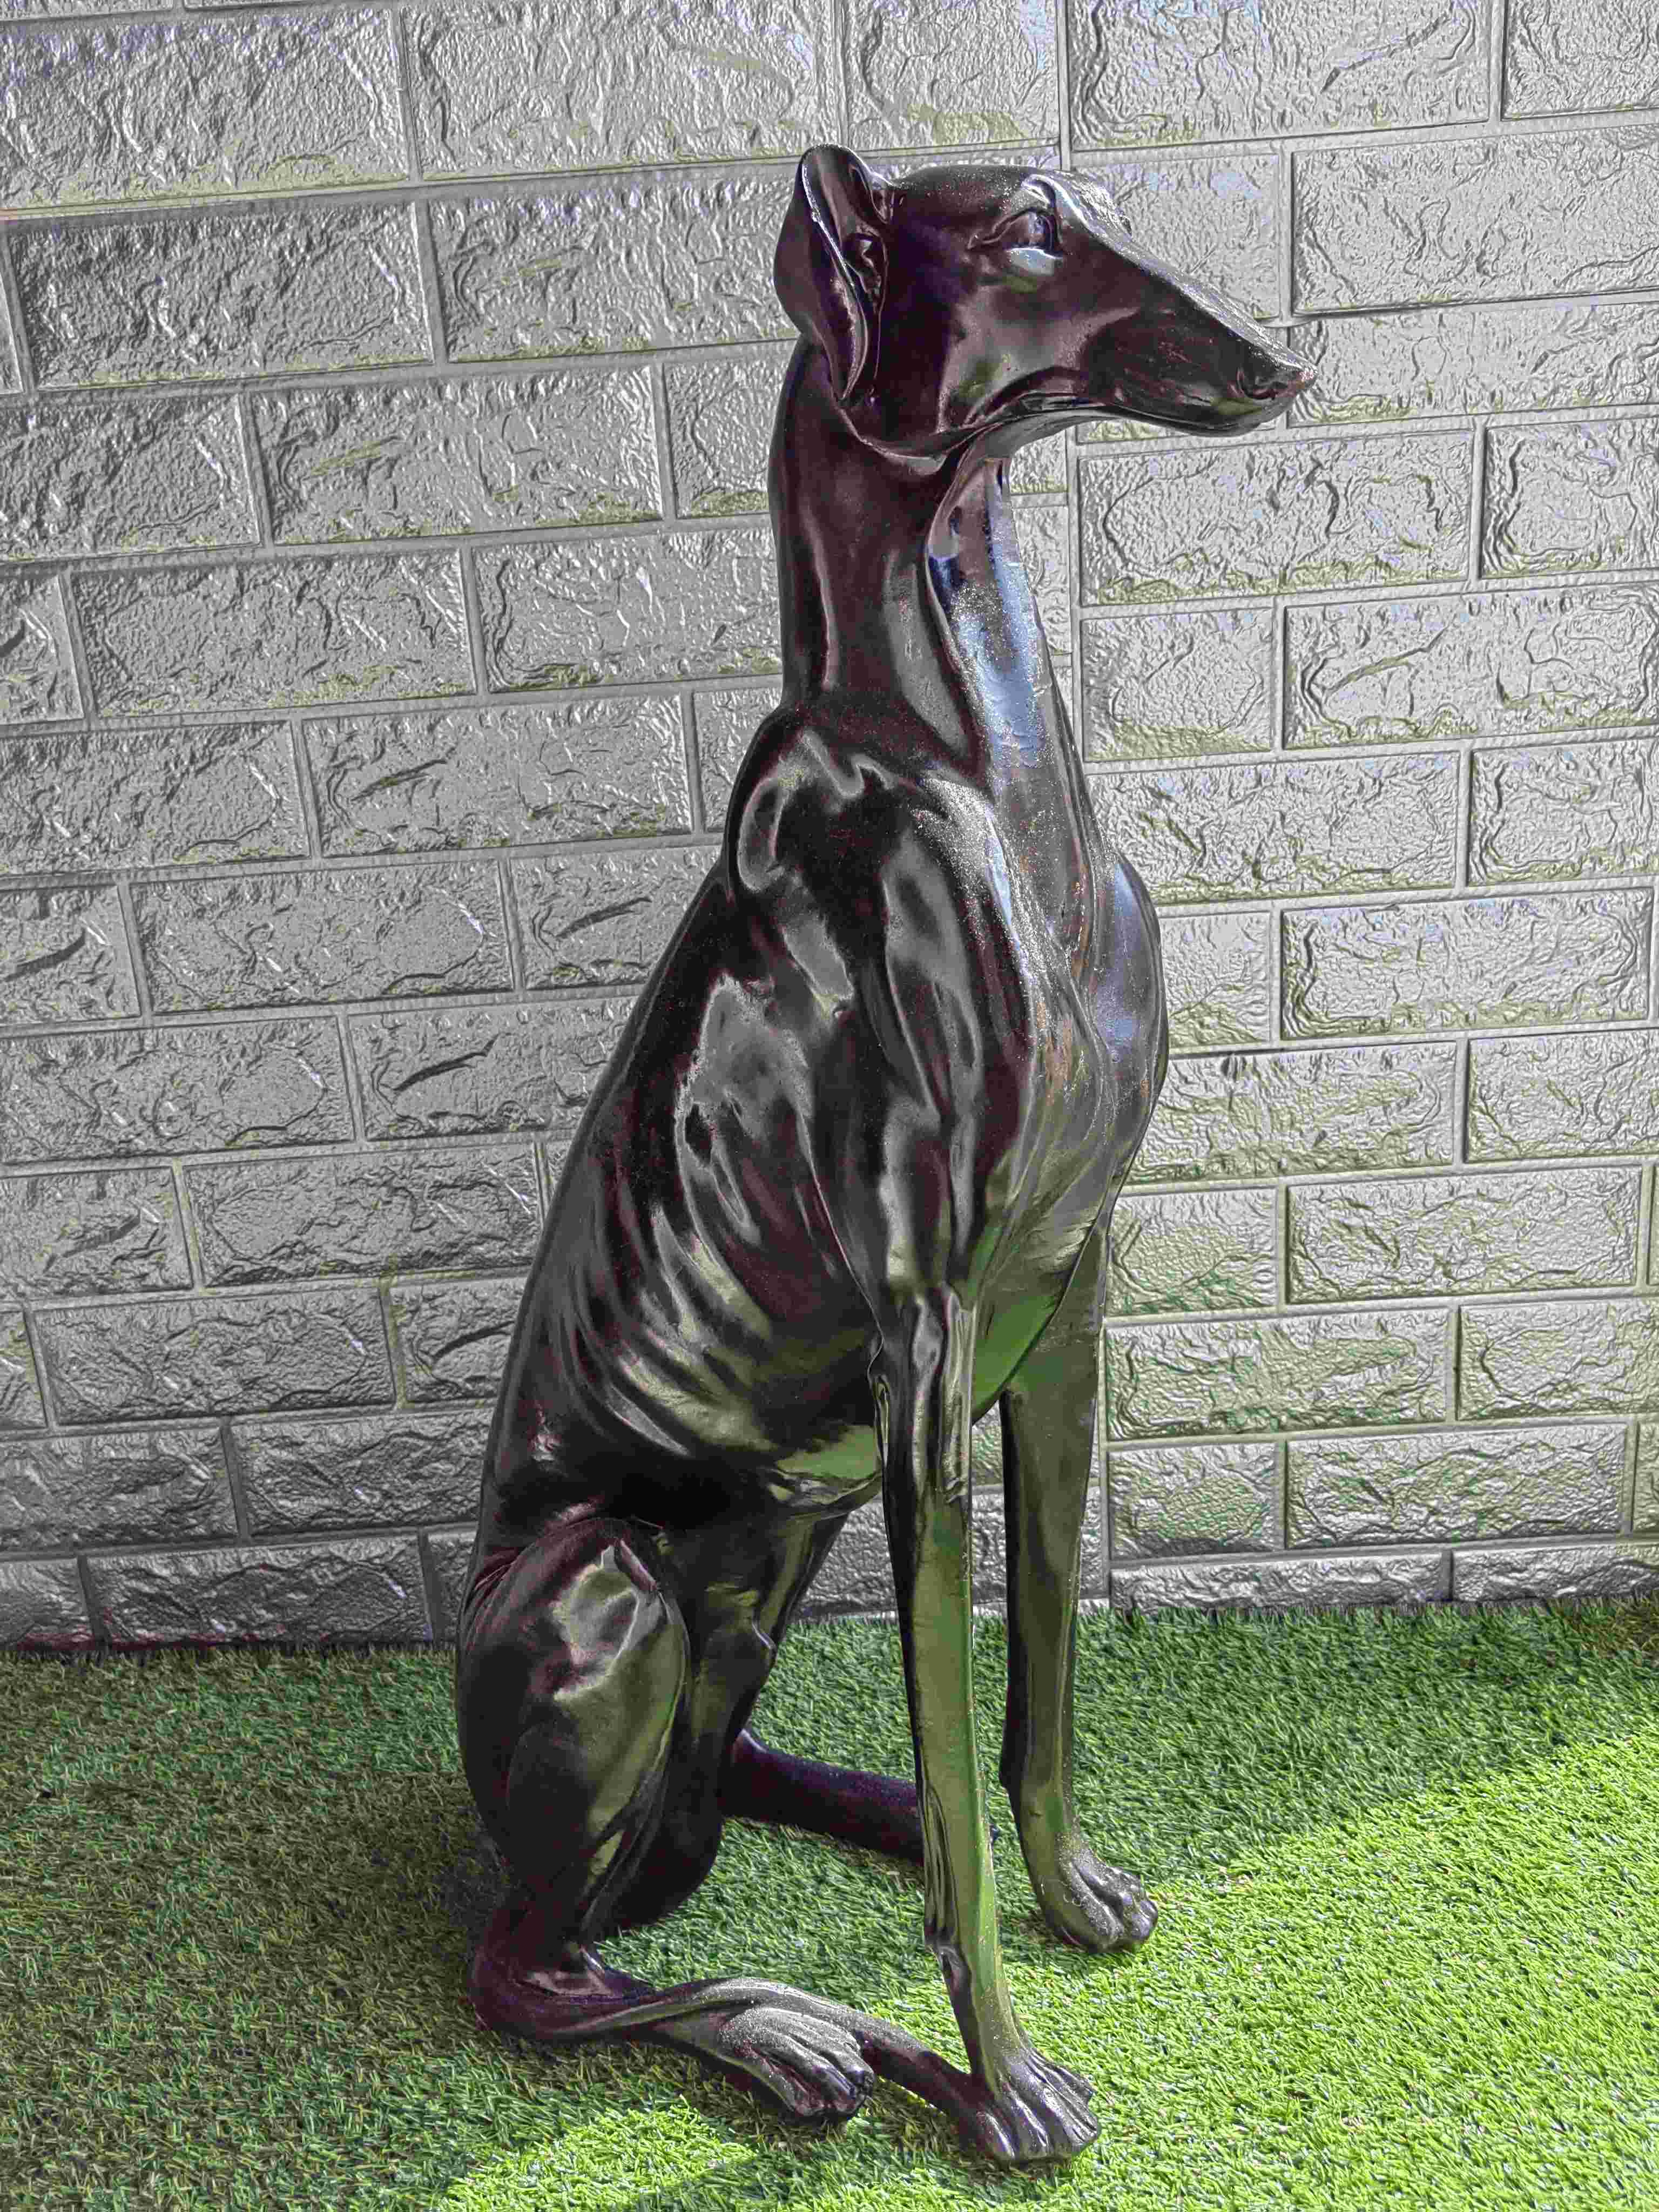 مجسمه سگ تازی کنار سالنی کد۵۲۹۳